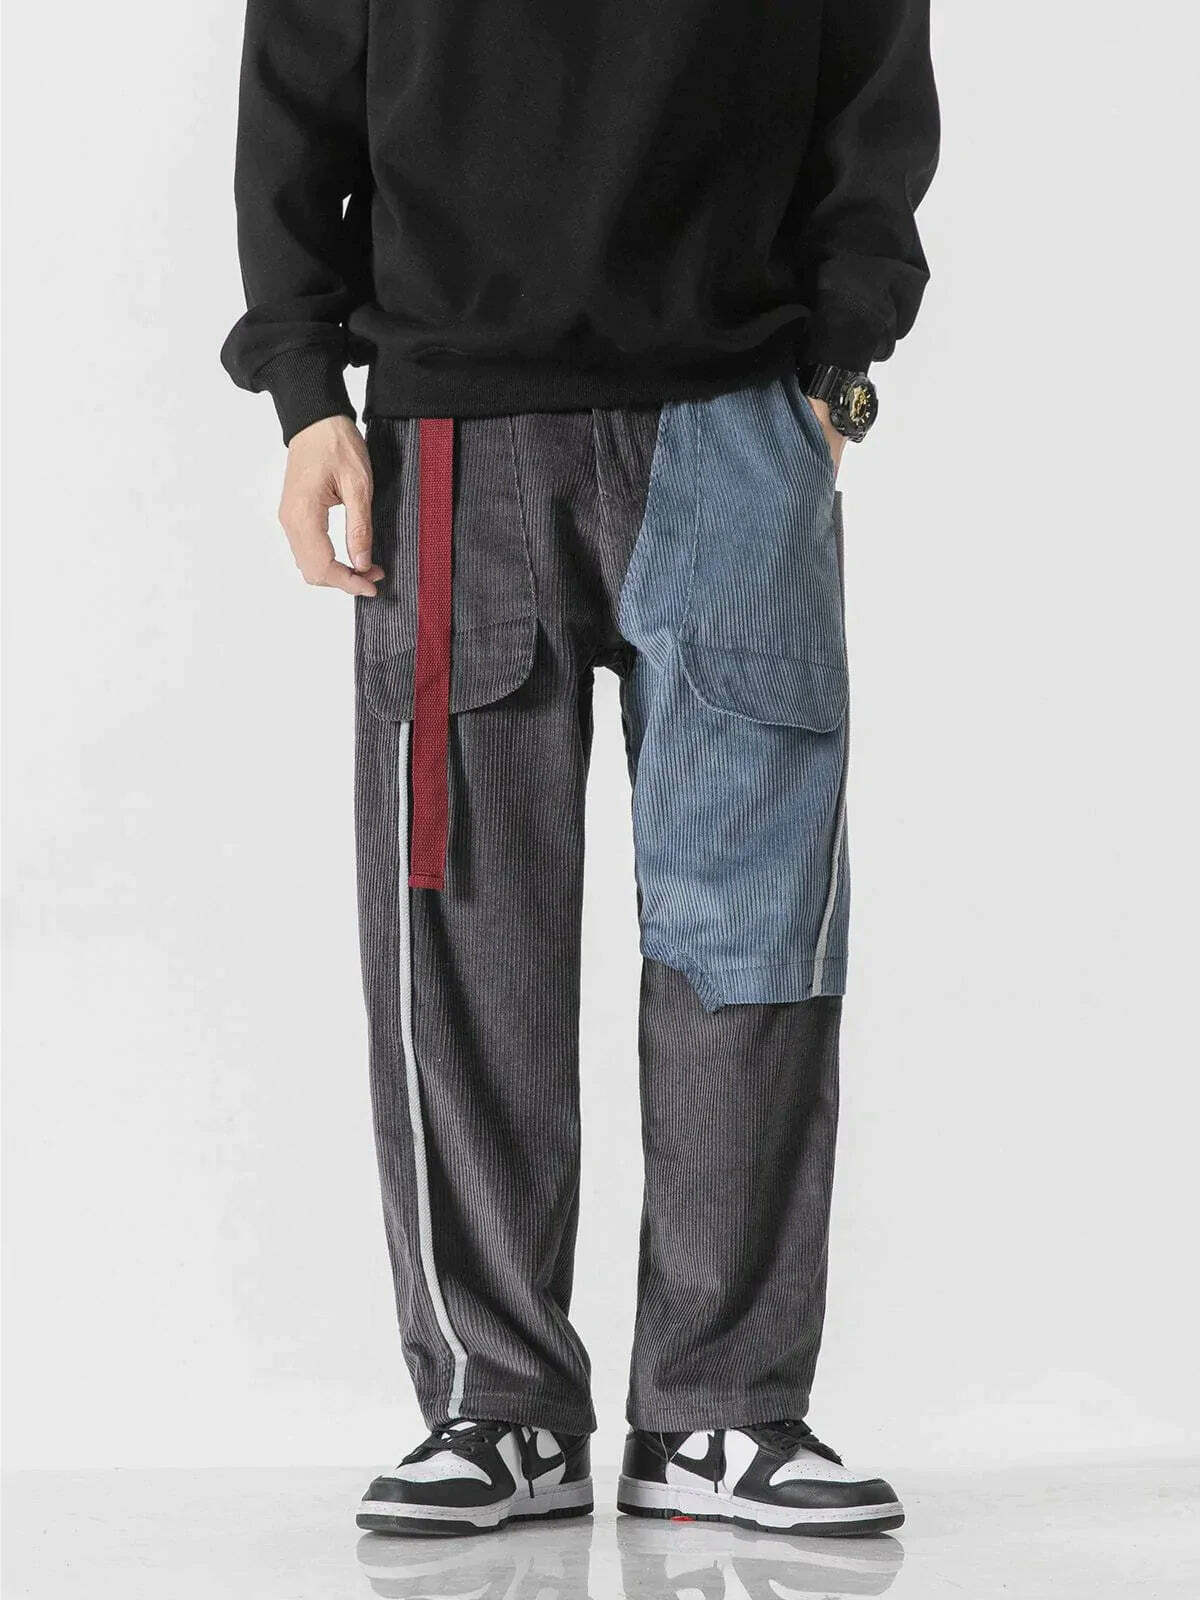 wideleg patchwork corduroy pants retro & edgy streetwear 7837